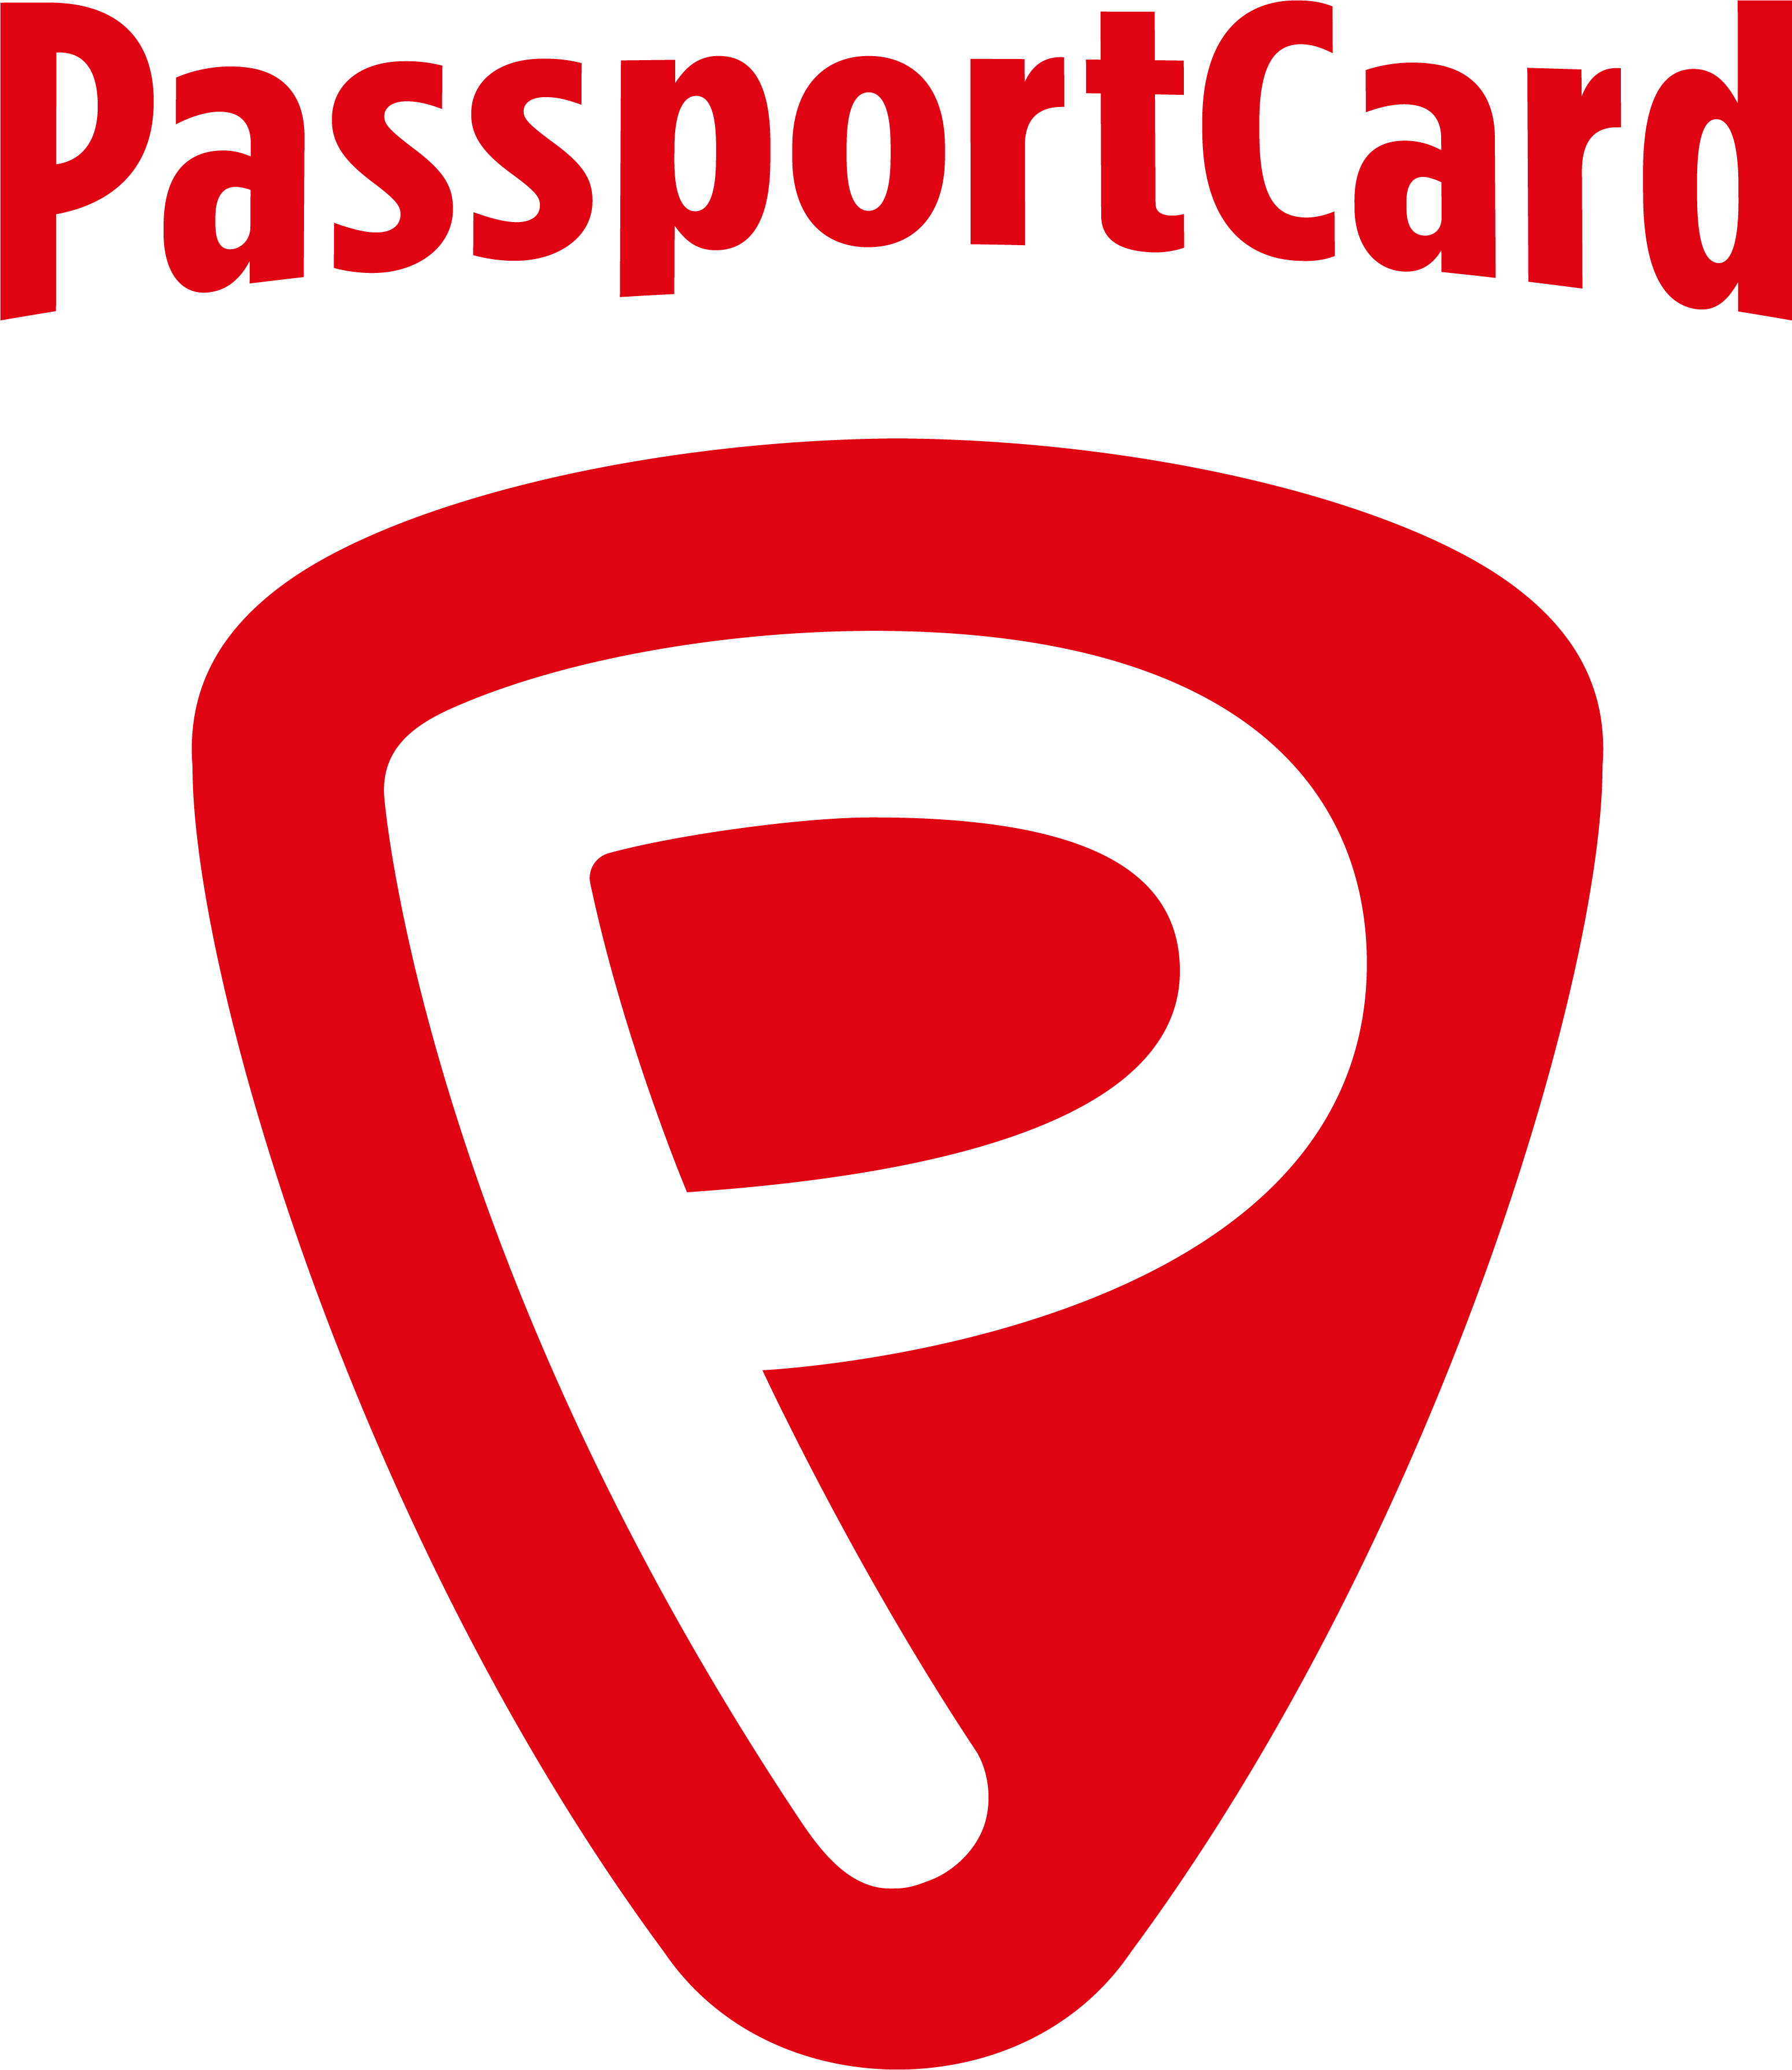 PassportCard Logo - Red on White